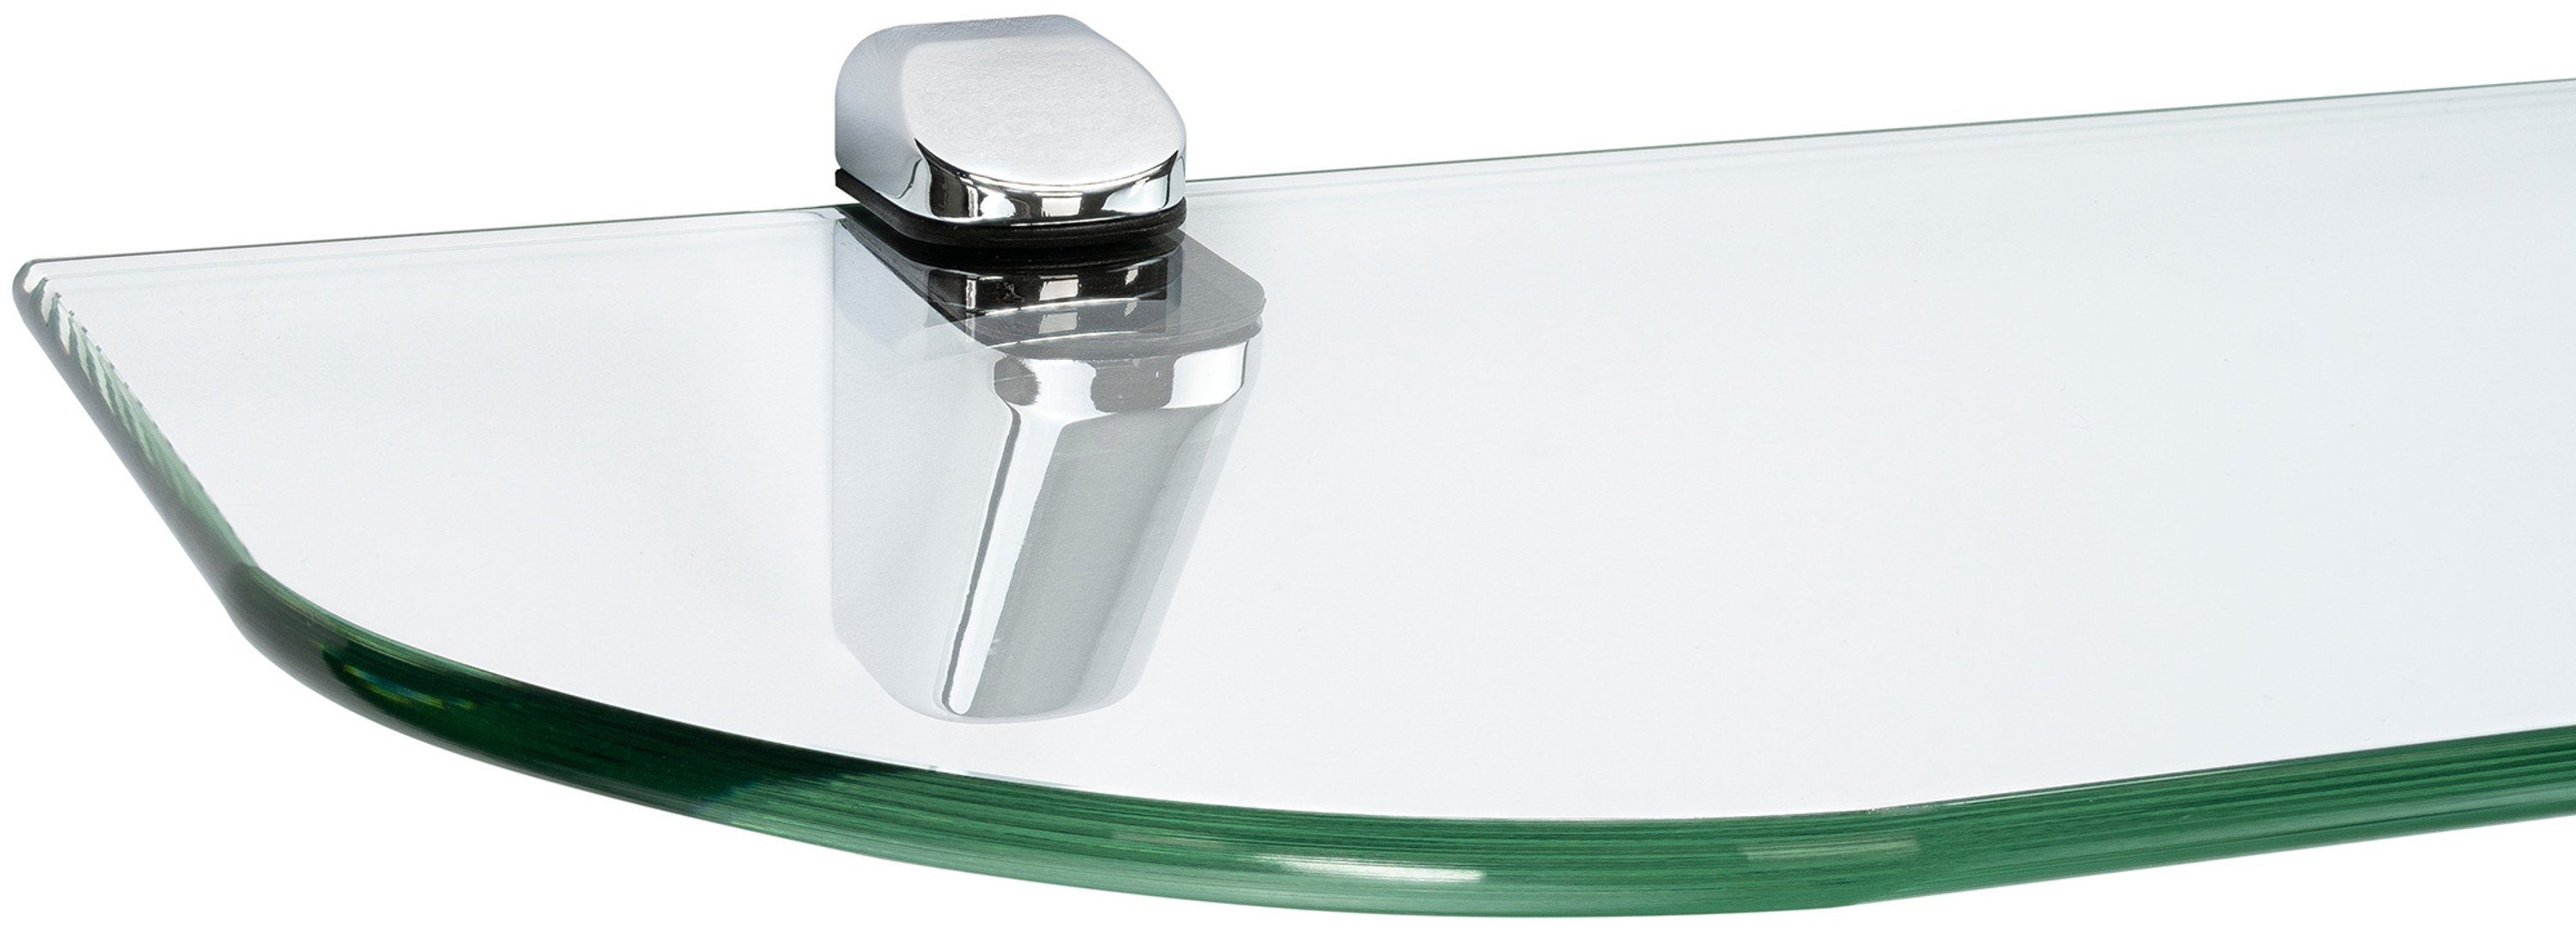 ib style Wandregal Glasregal 6mm klar 40 x 15 cm + Clip CUCALE Verchromt, Glasboden aus ESG-Sicherheitsglas - Wandregal